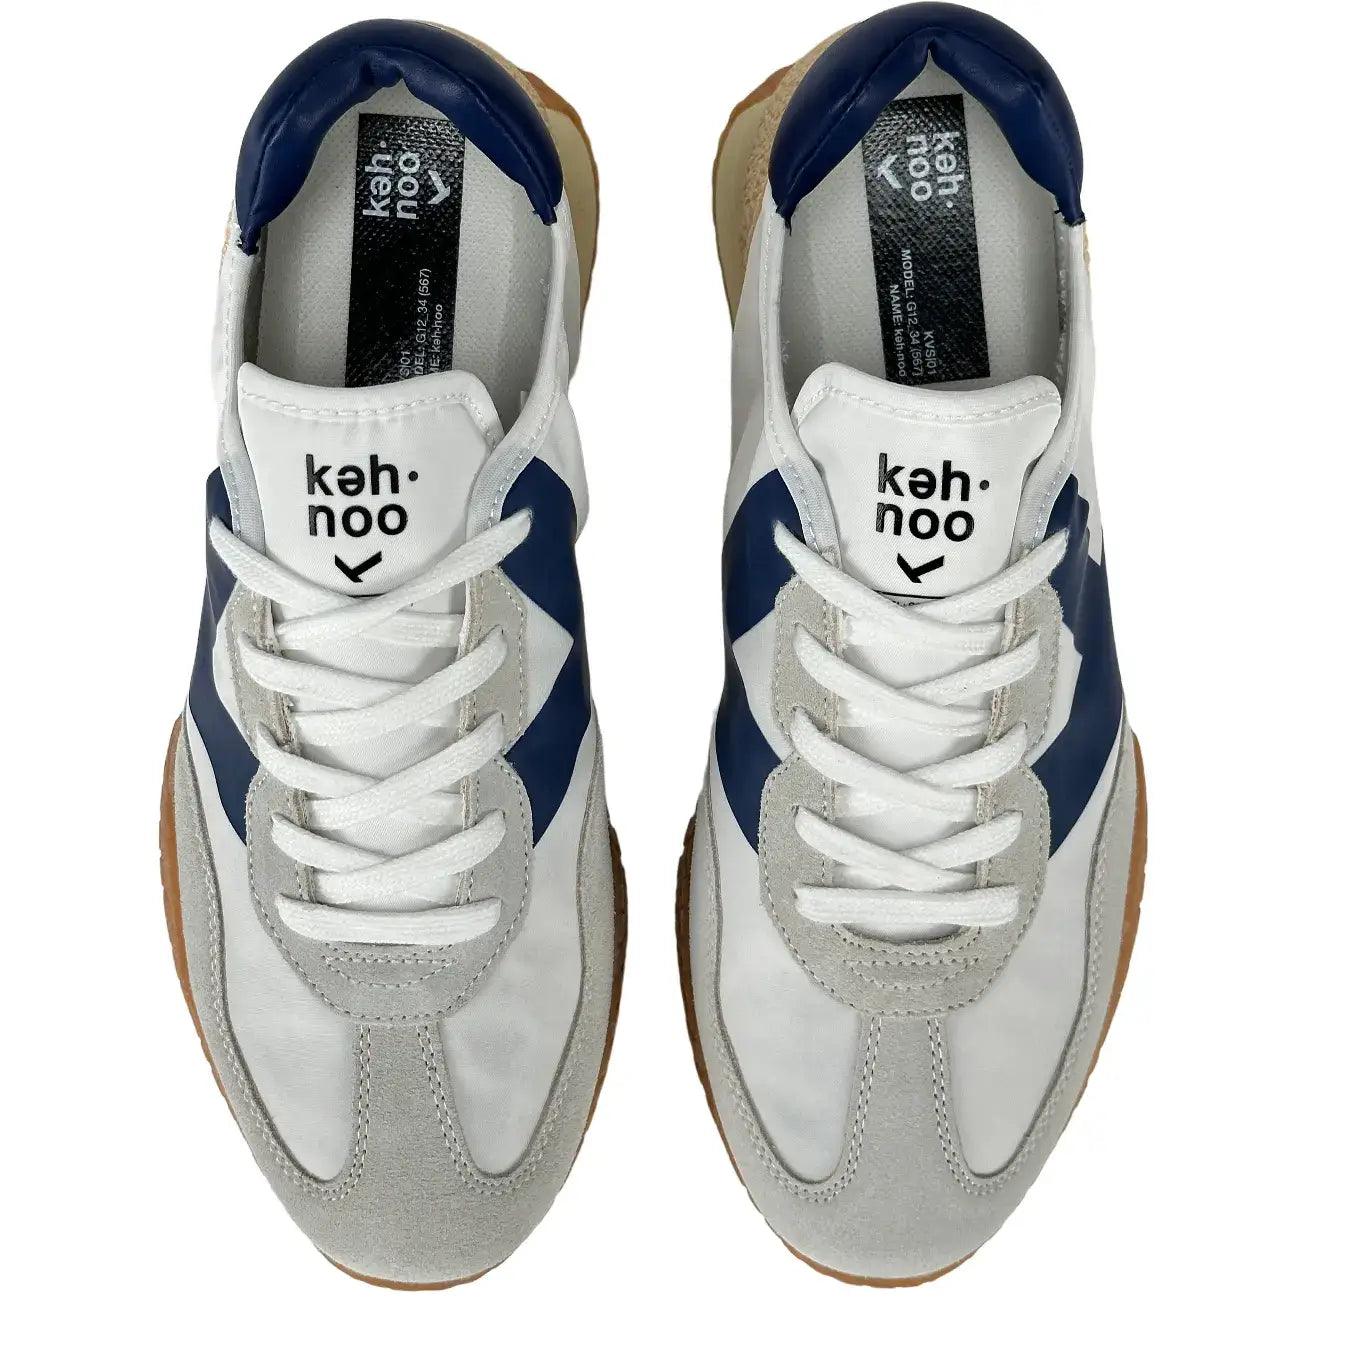 keh noo Sneakers, Km9313, Logo Blu, wht Blu, Bassiniboutique.it, 2023 p/e